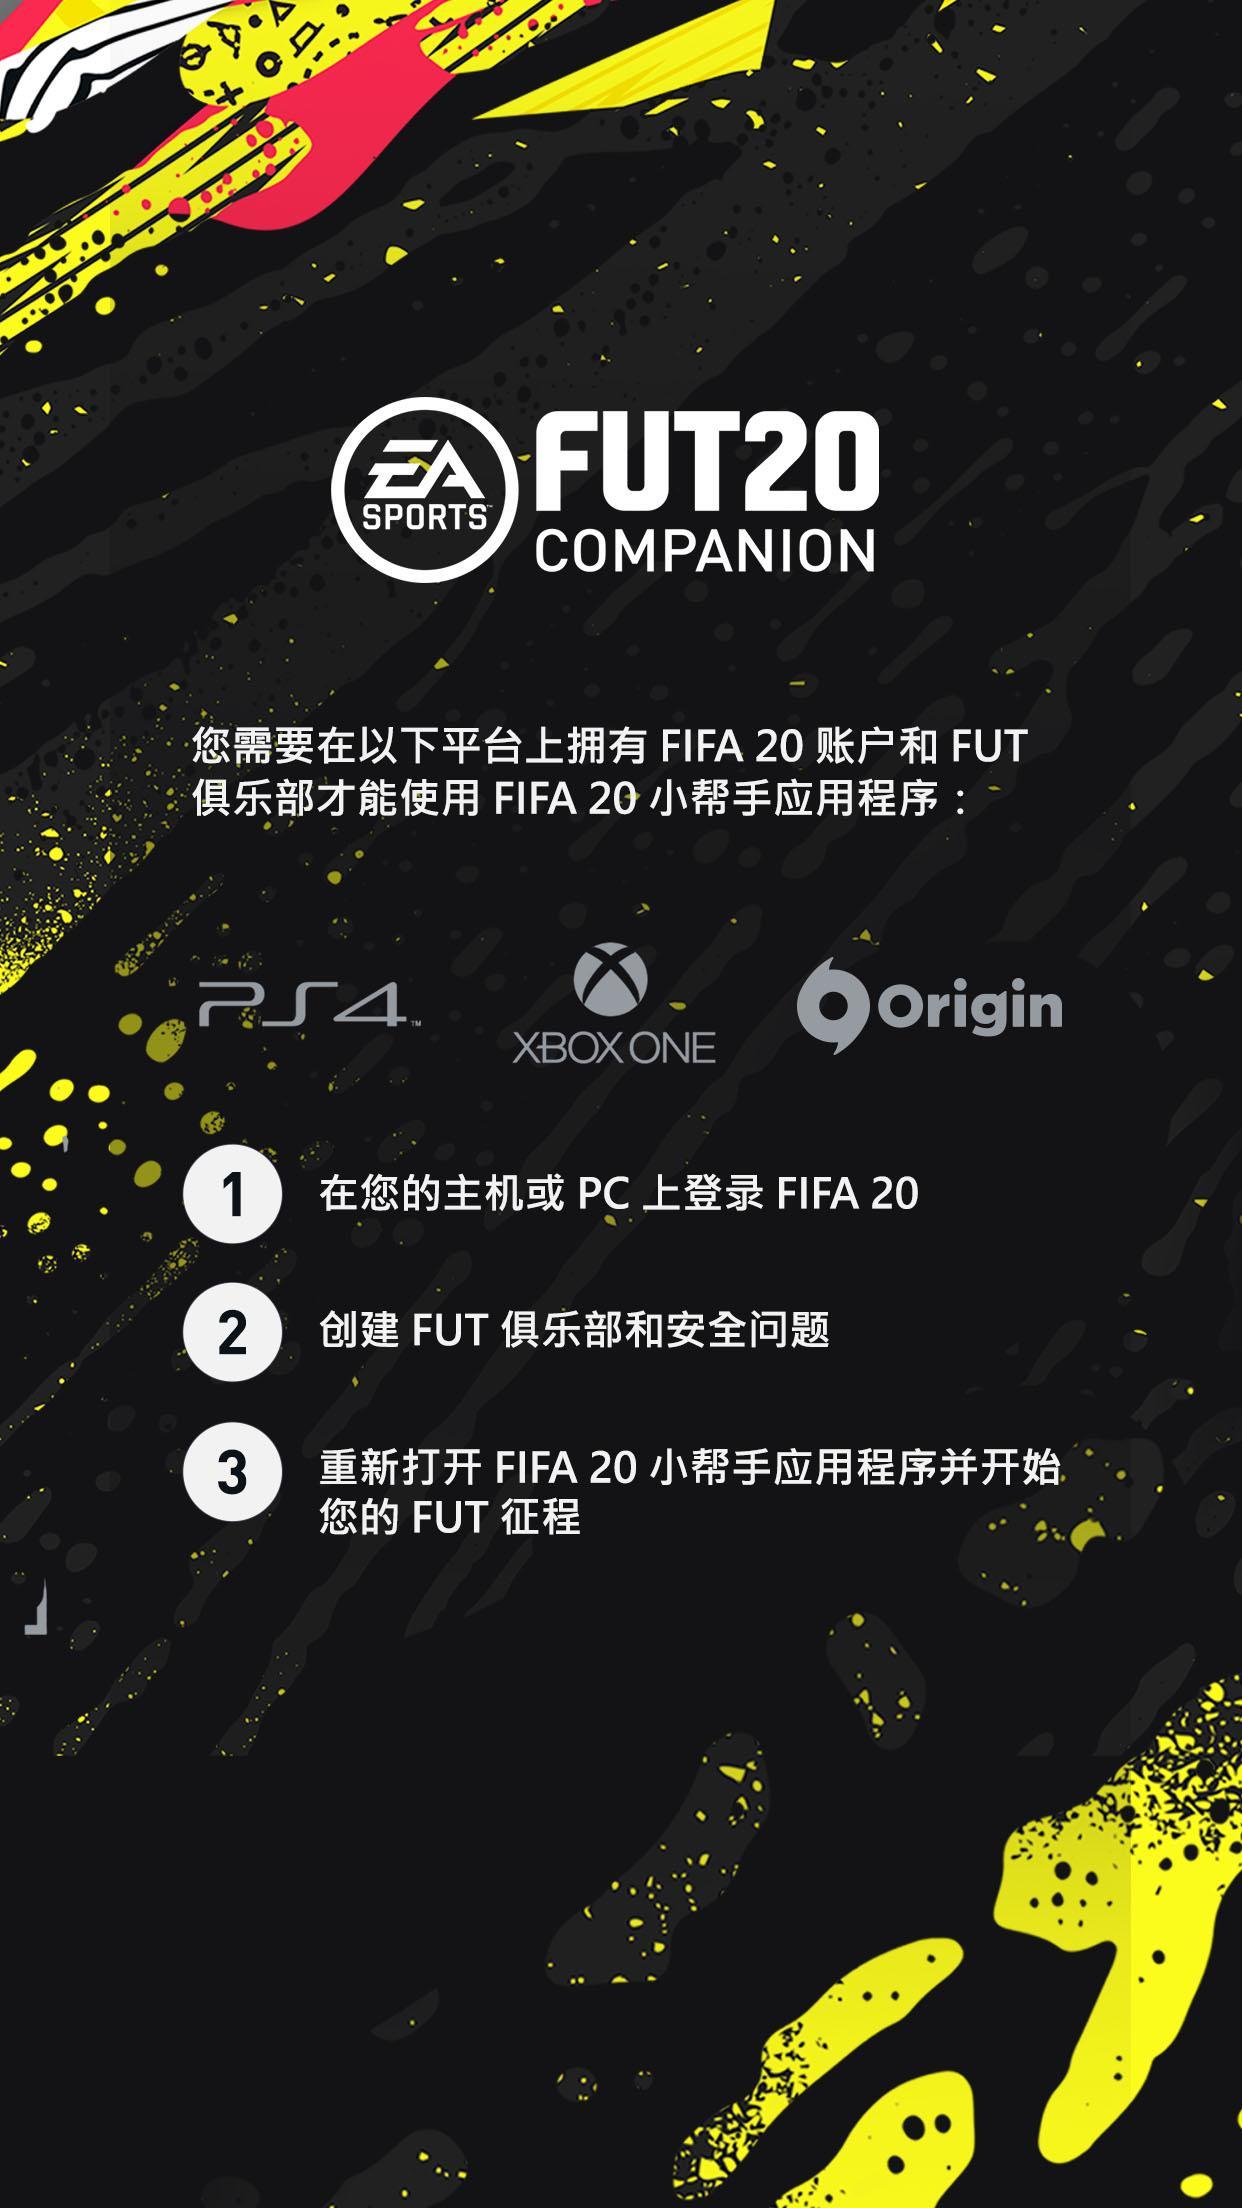 Ea Sports Fifa 18 Companion 预约下载 Taptap 发现好游戏